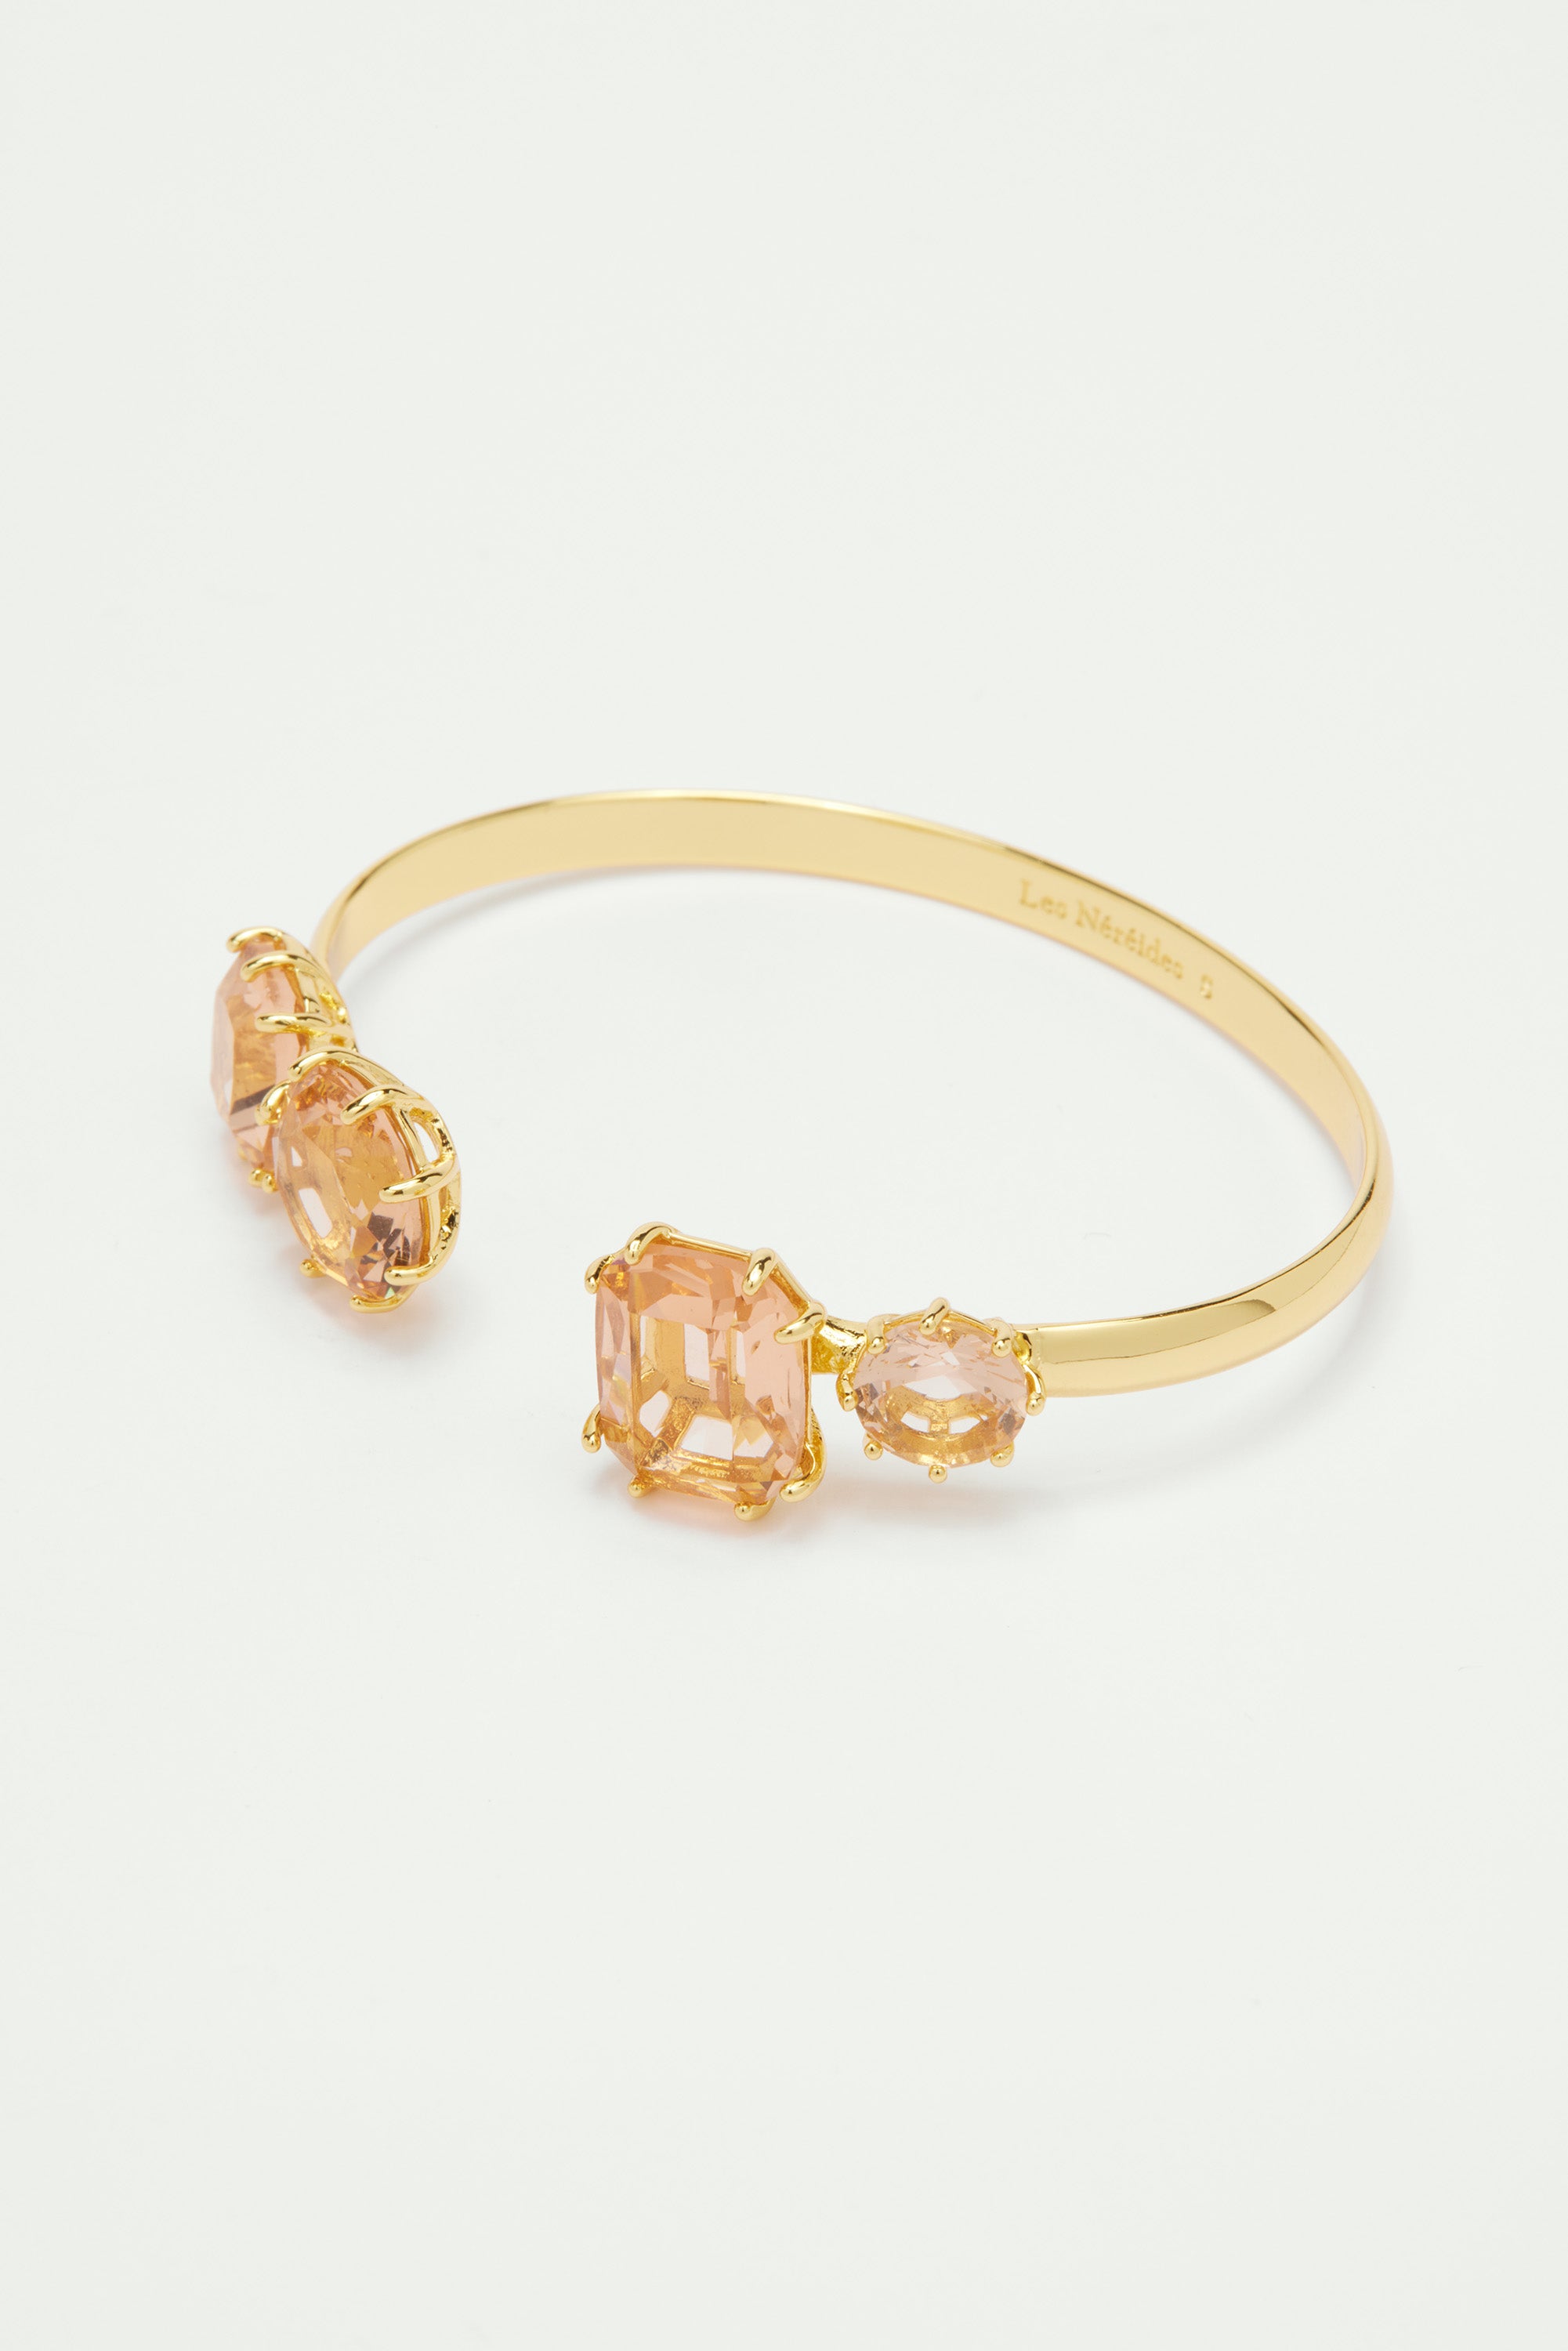 Apricot pink diamantine 4 stone bangle bracelet